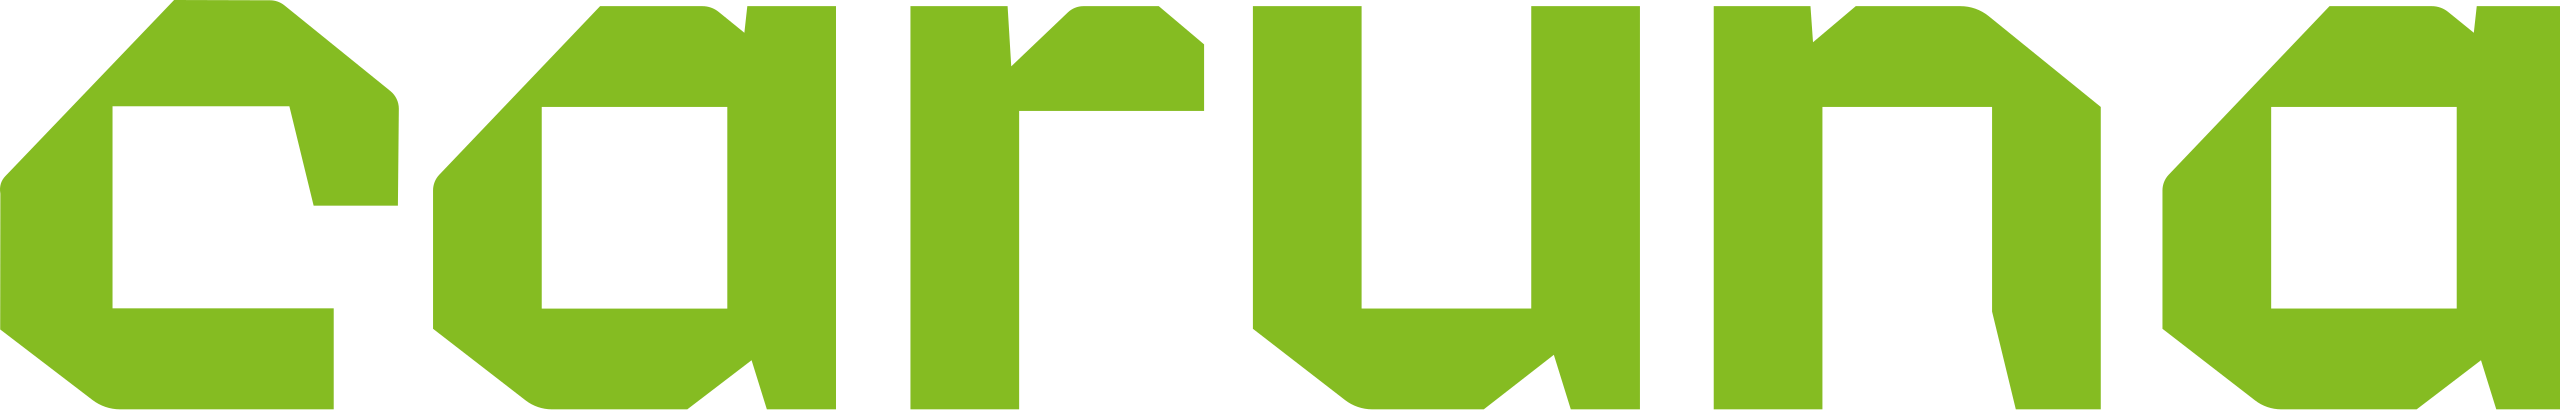 Caruna-logo